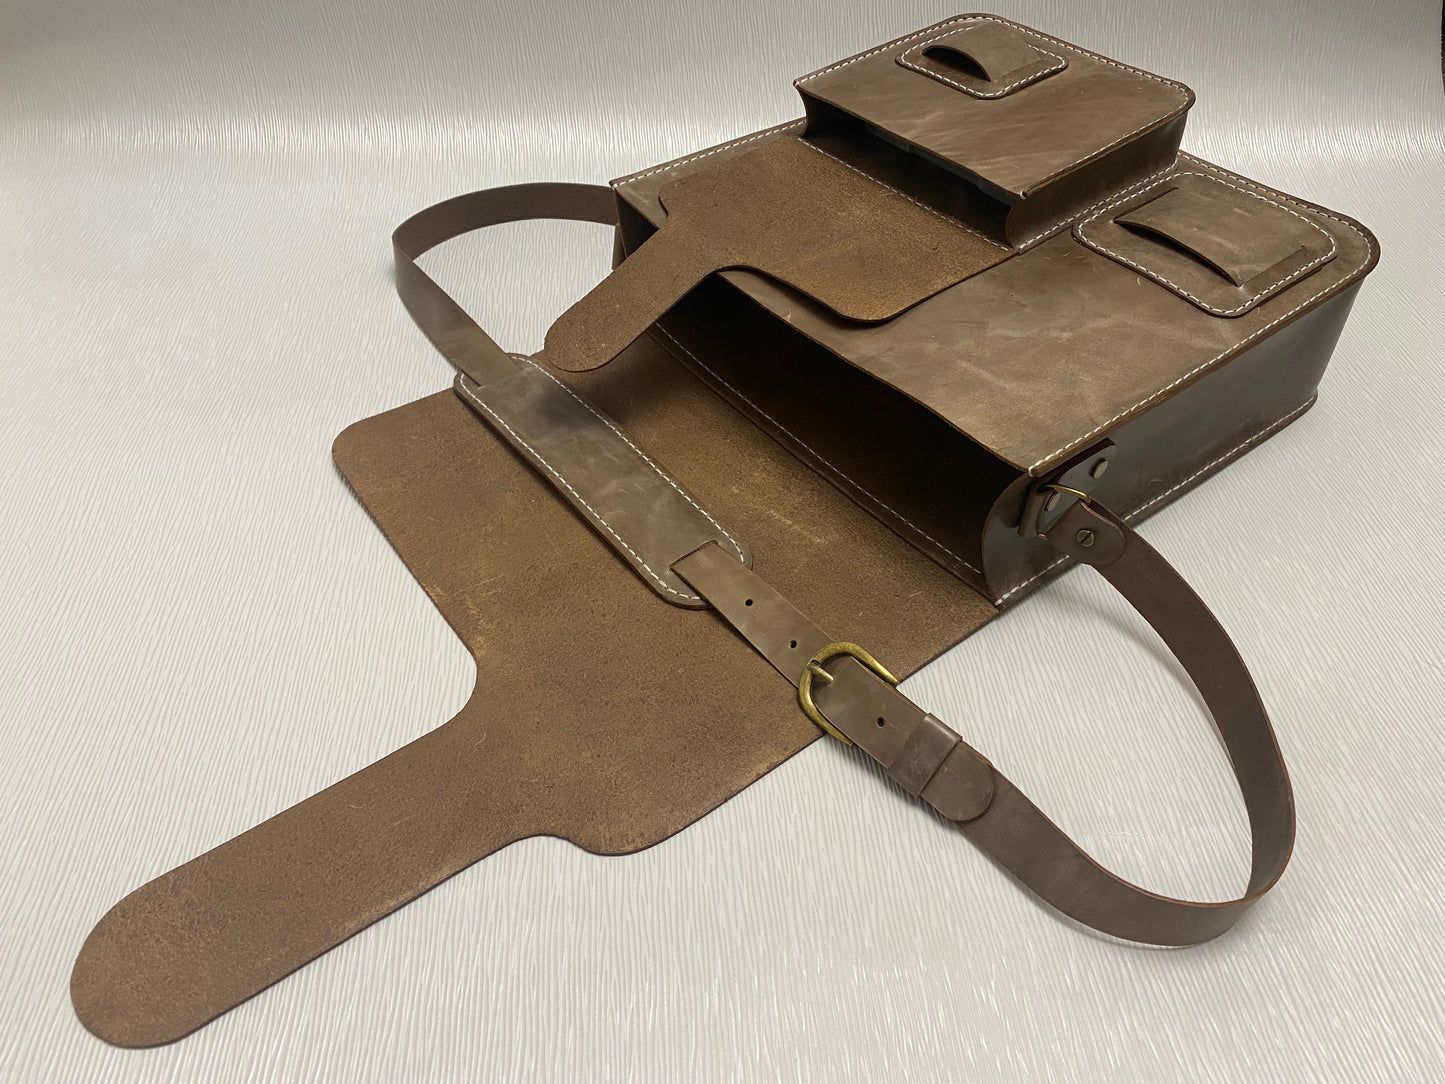 12” Handmade Leather Messenger Bag